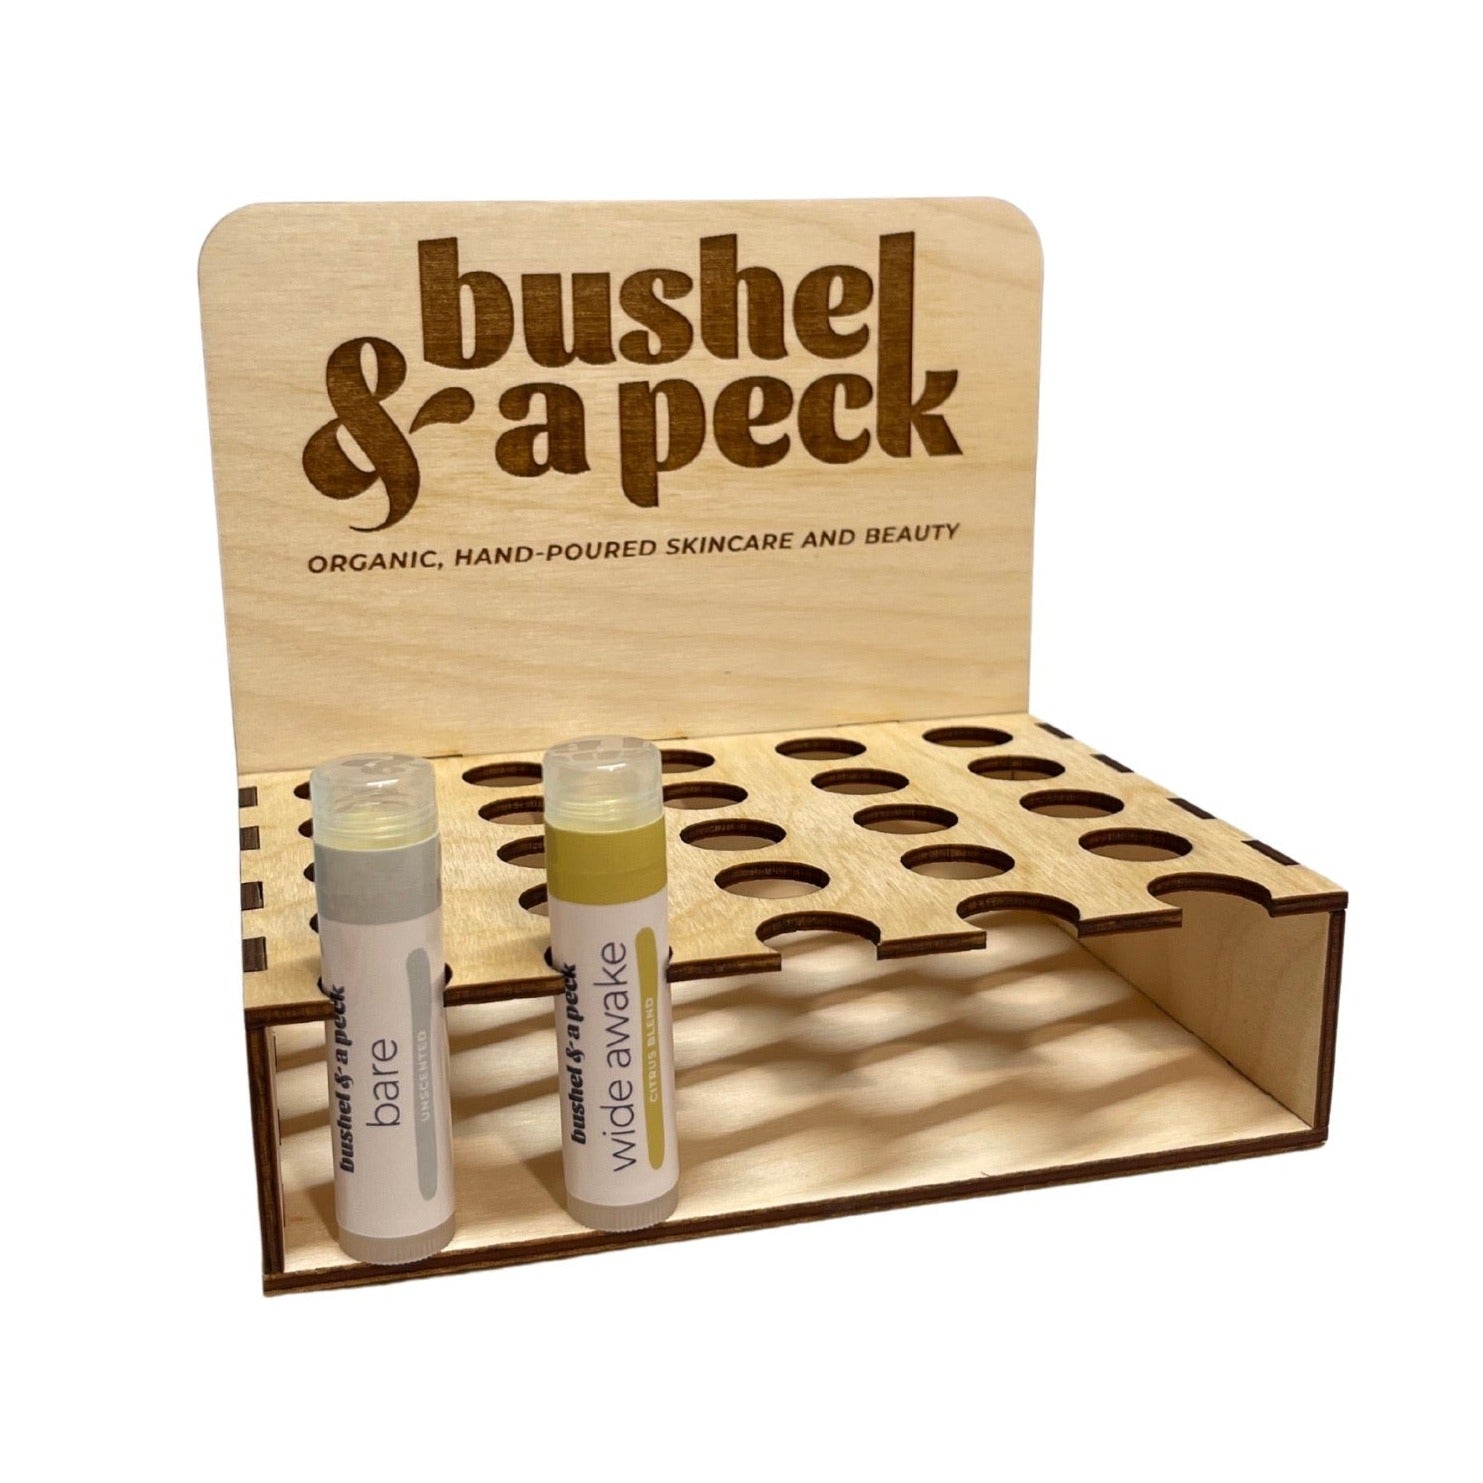 Custom Lip Balm Display Boxes - 25 Lip Balms - Bushel & A Peck Skincare with 2 lip balms in display by LeeMo Designs in Bend, Oregon